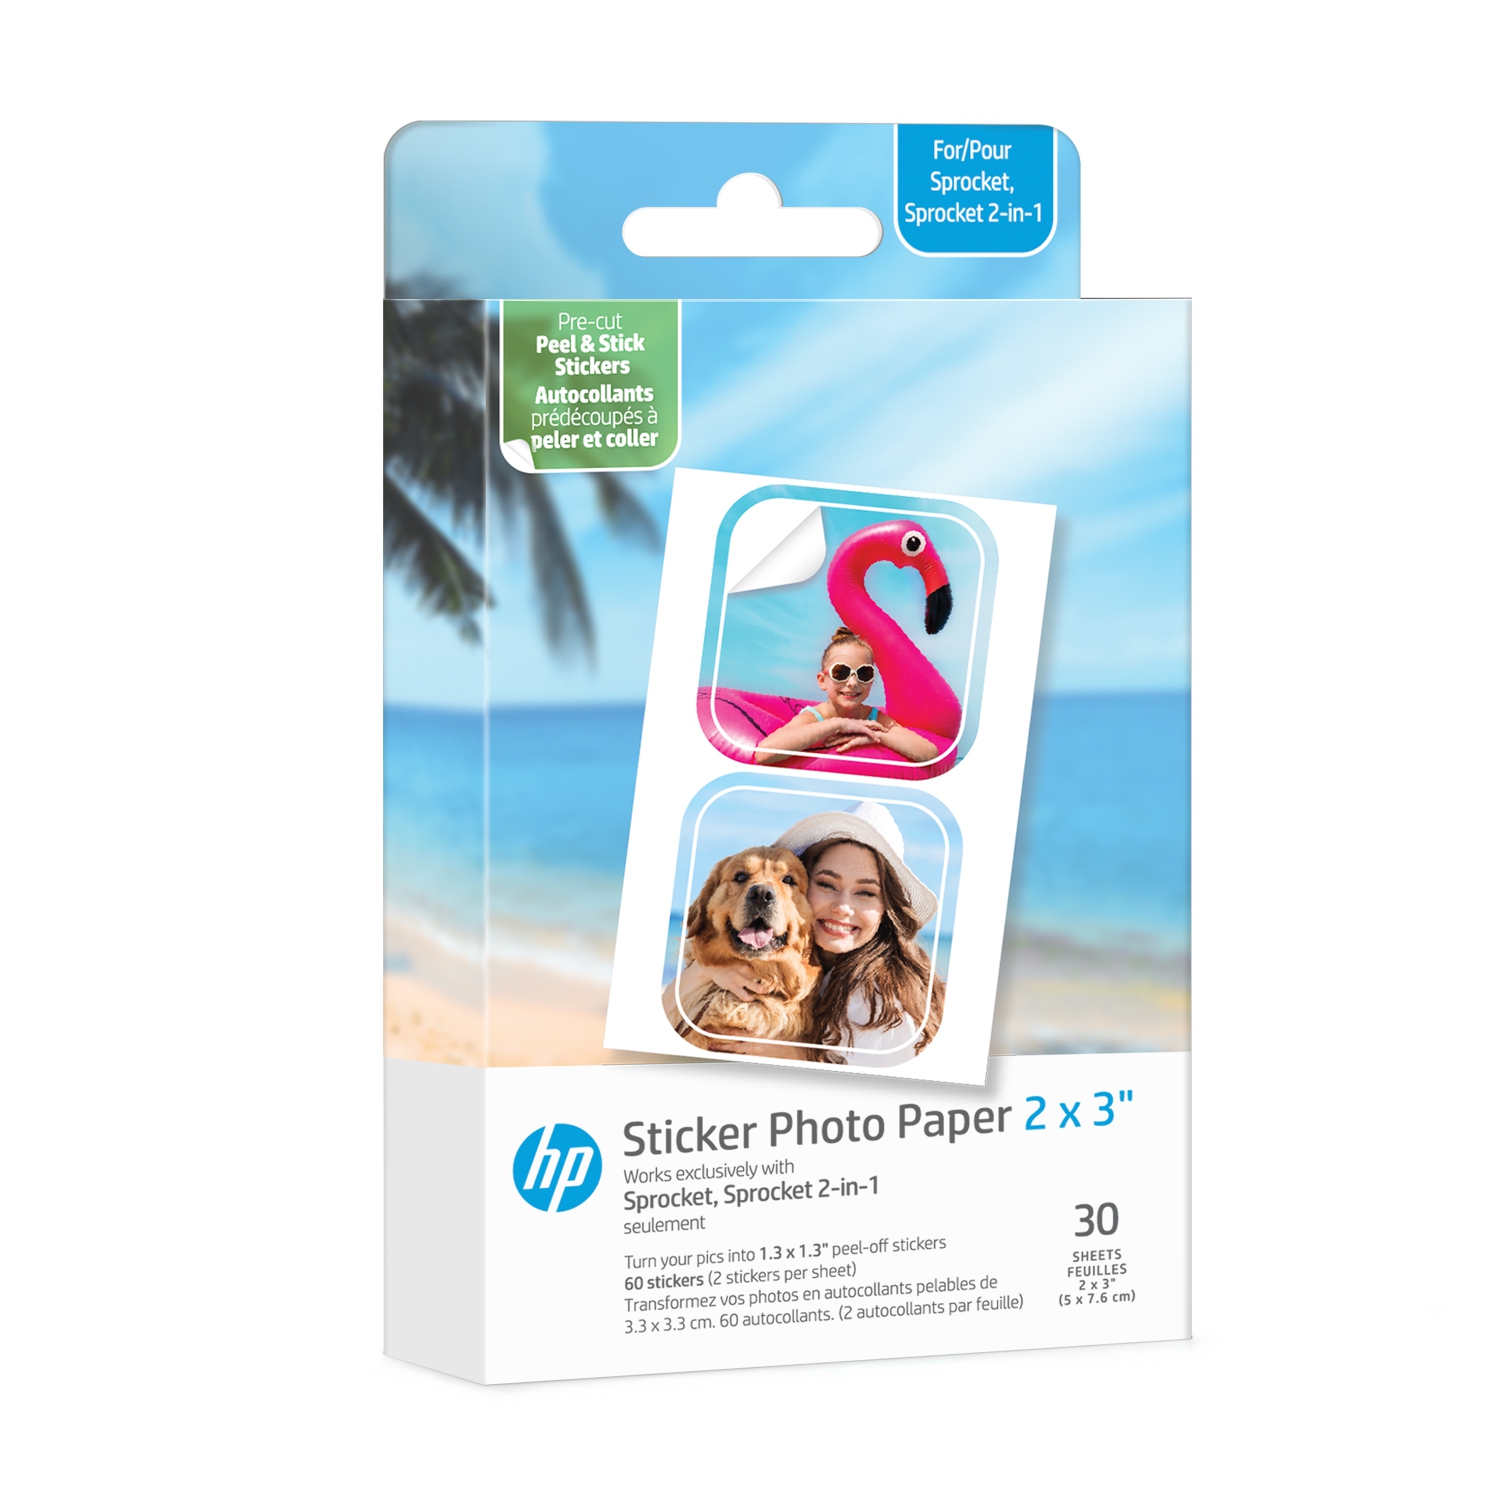 HP Sprocket 2x3” Premium Zink Pre-Cut Sticker Photo Paper, 30 Printing Paper Sheets